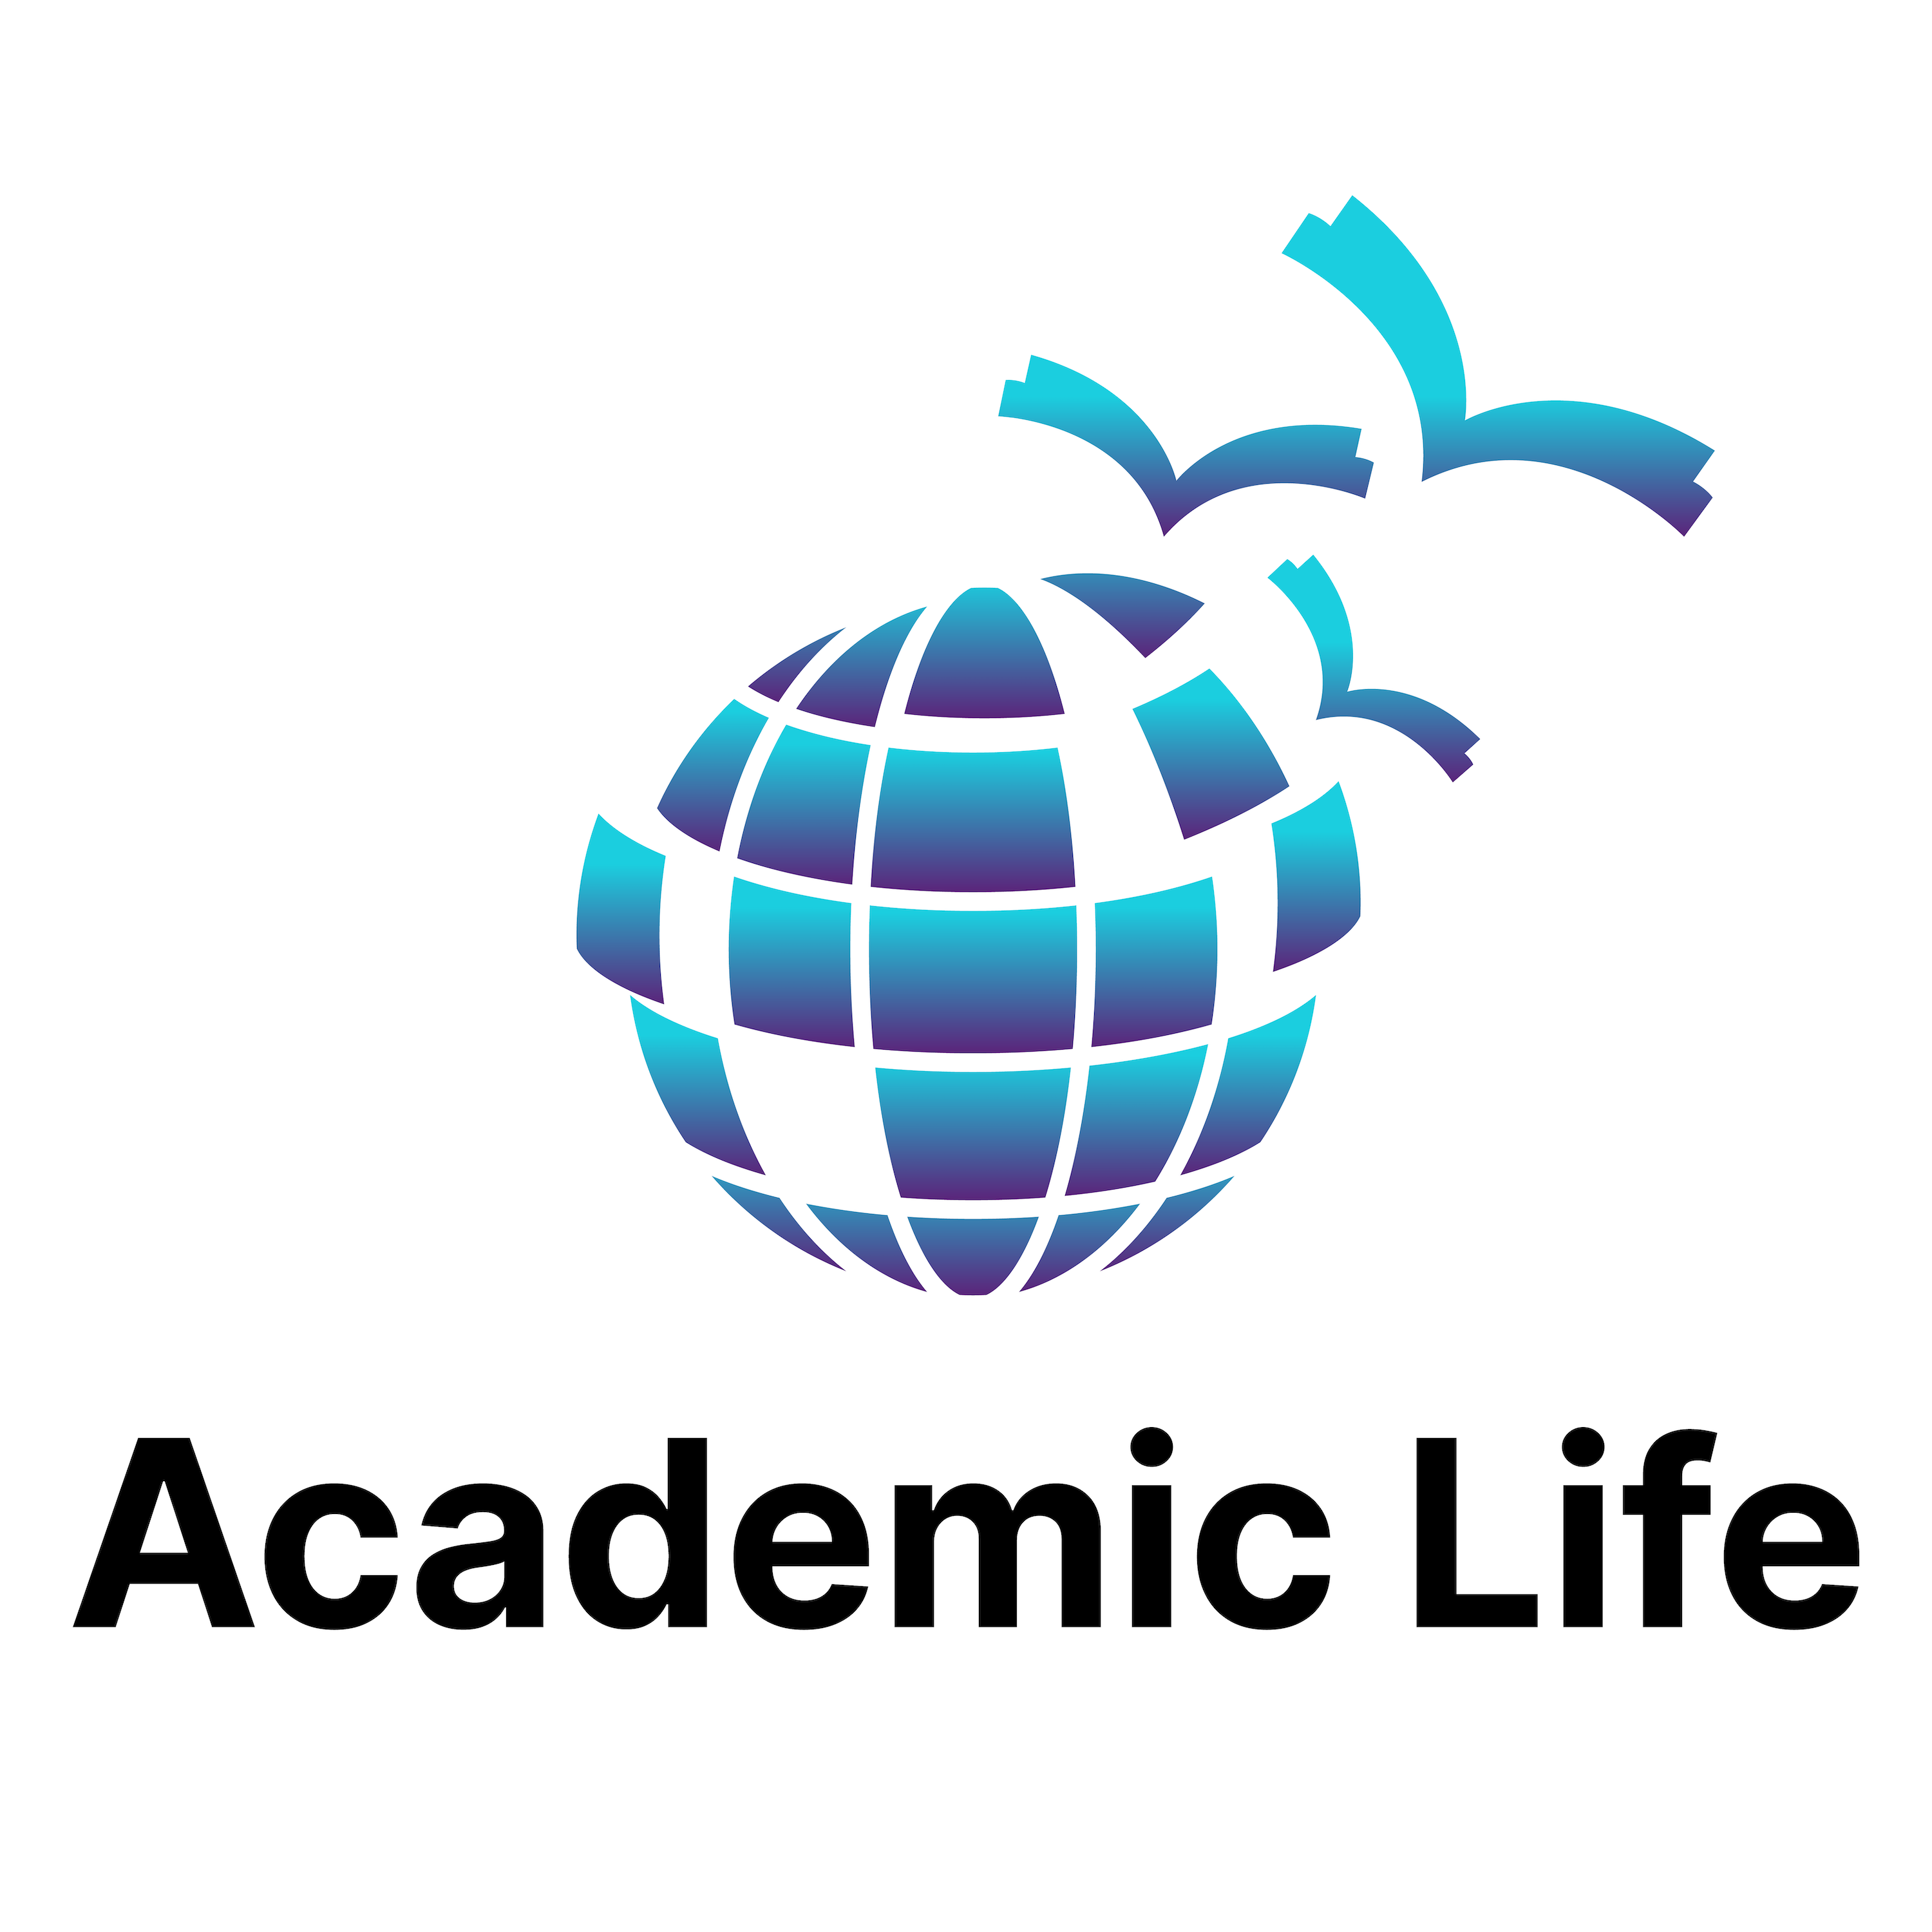 Academic Life